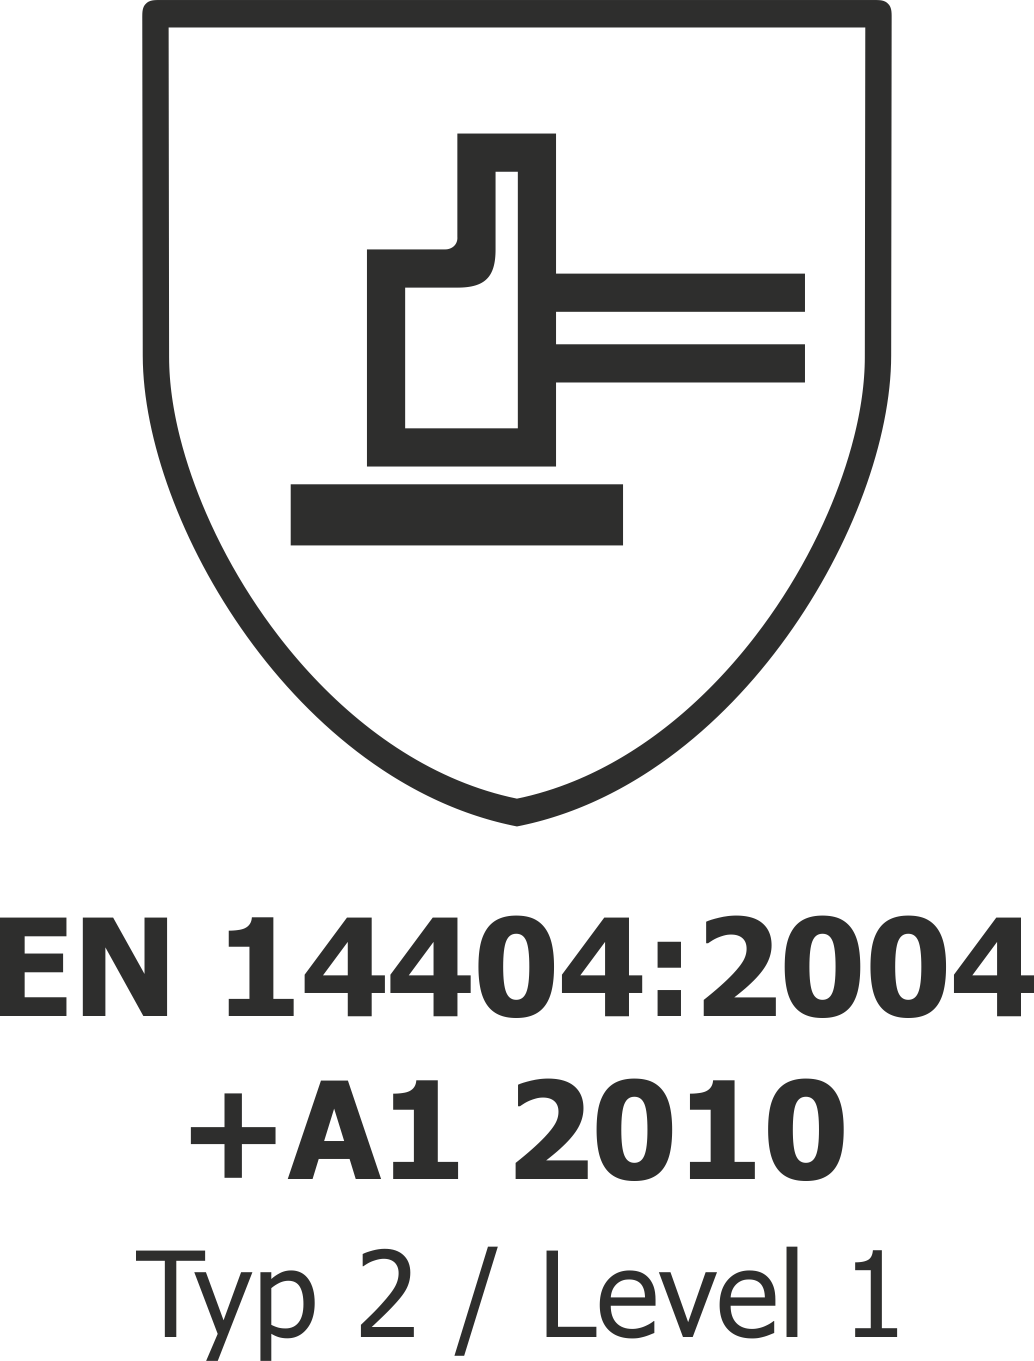 EN 14404:2004 + A1:2010